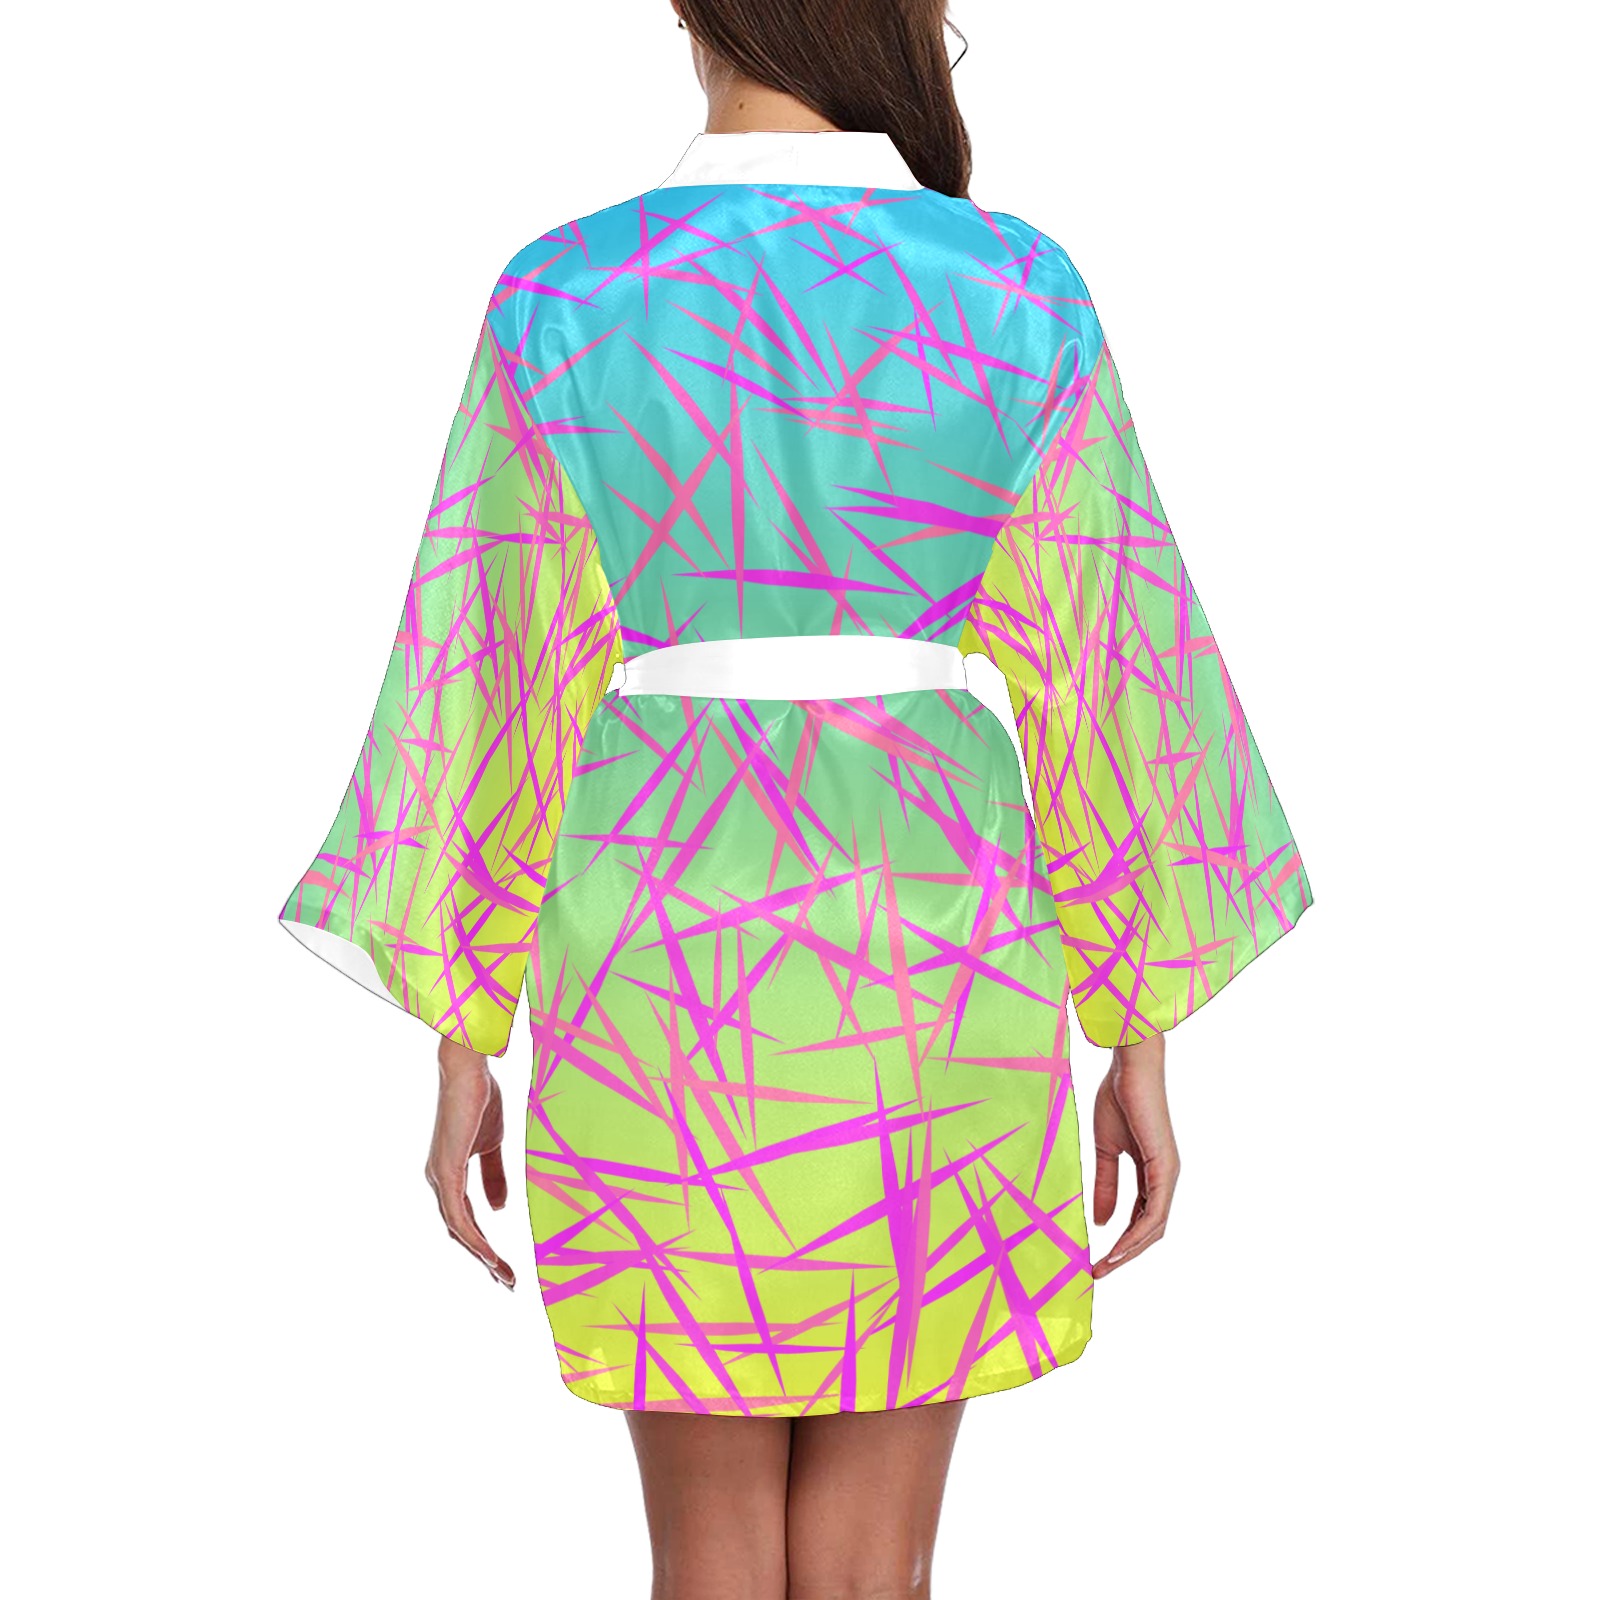 Joy Long Sleeve Kimono Robe